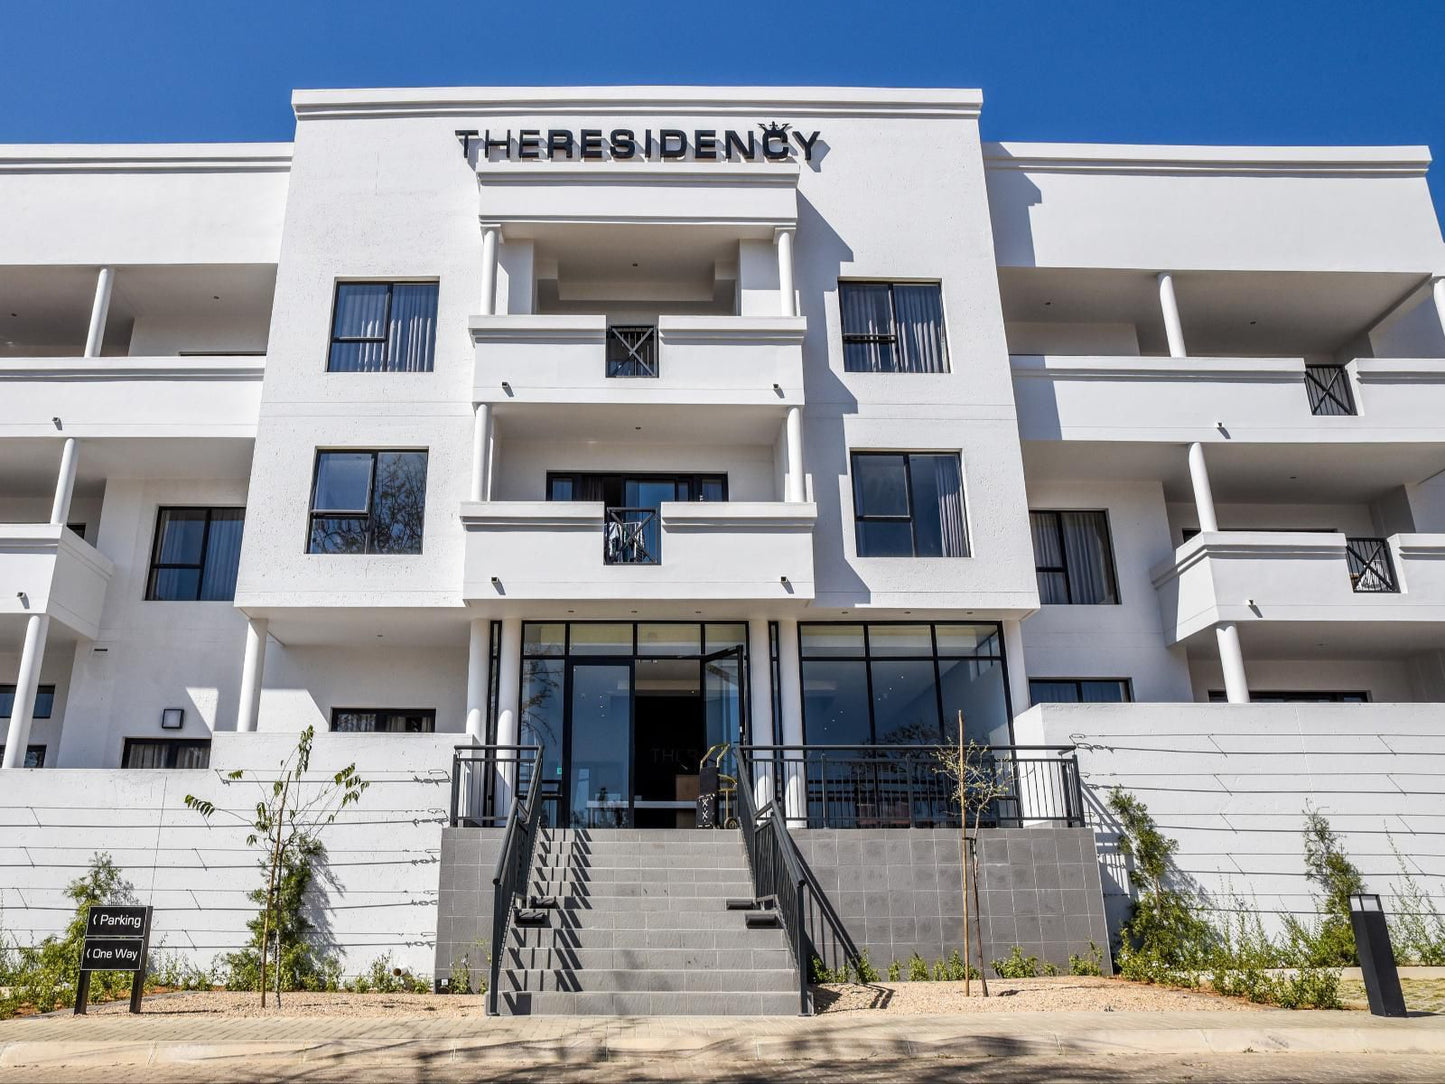 The Residency Sandhurst Hurlingham Johannesburg Gauteng South Africa House, Building, Architecture, Sign